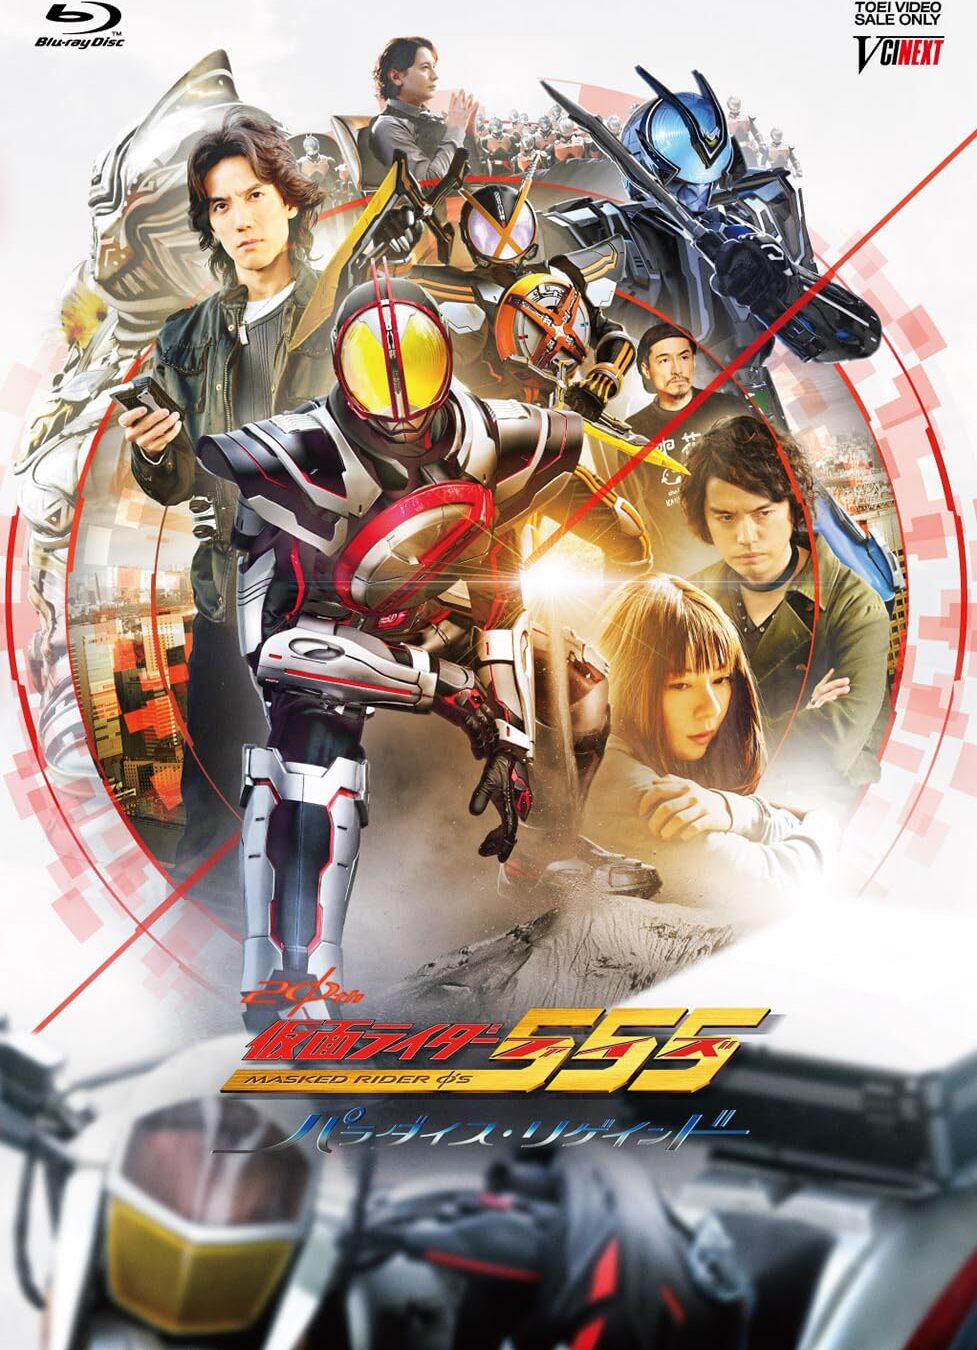 Kamen Rider 555 20th: Paradise Regained Blu-ray (Japan)